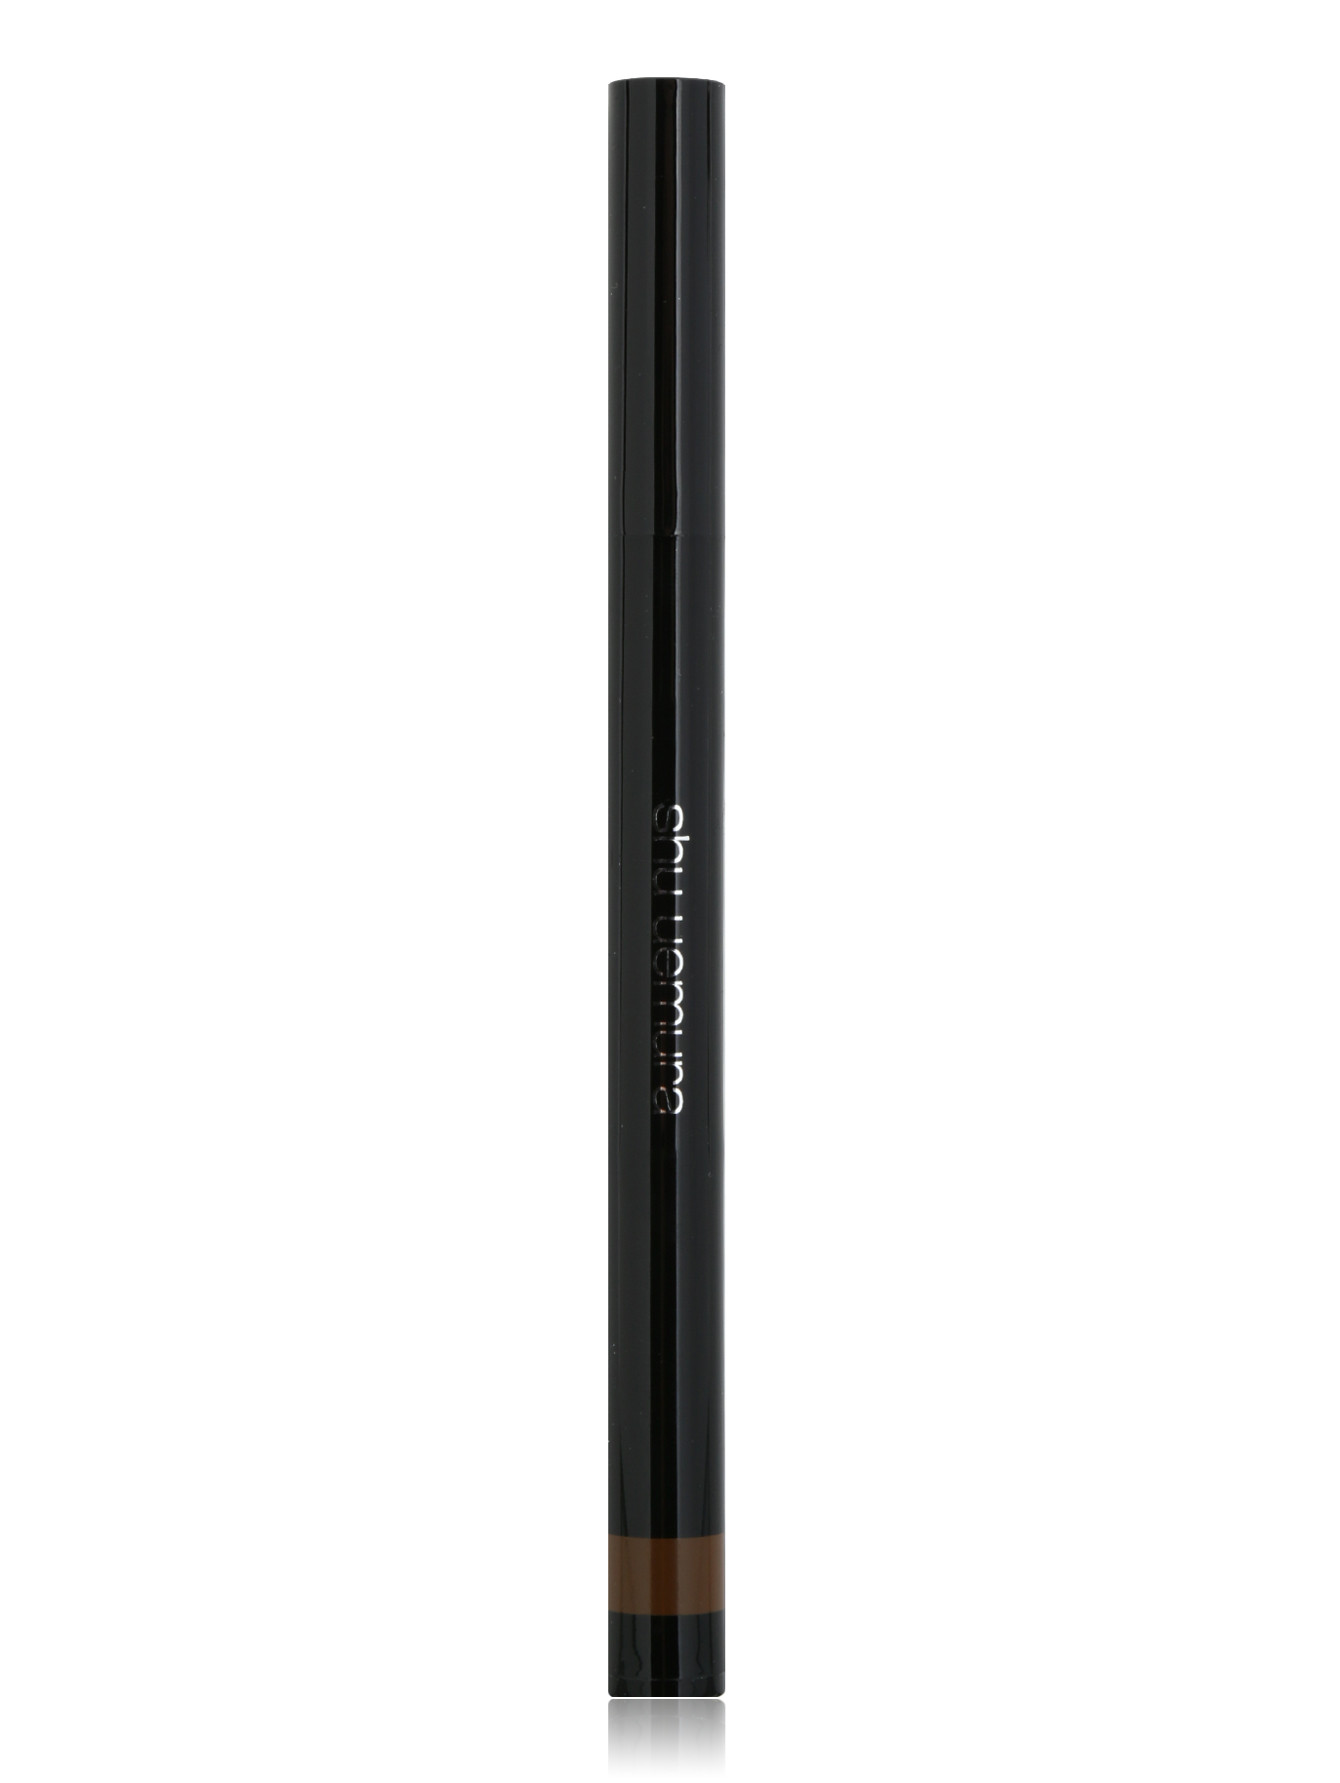 Подводка Waterpaint:Ink, Natural Brown, 0,5 мл - Общий вид